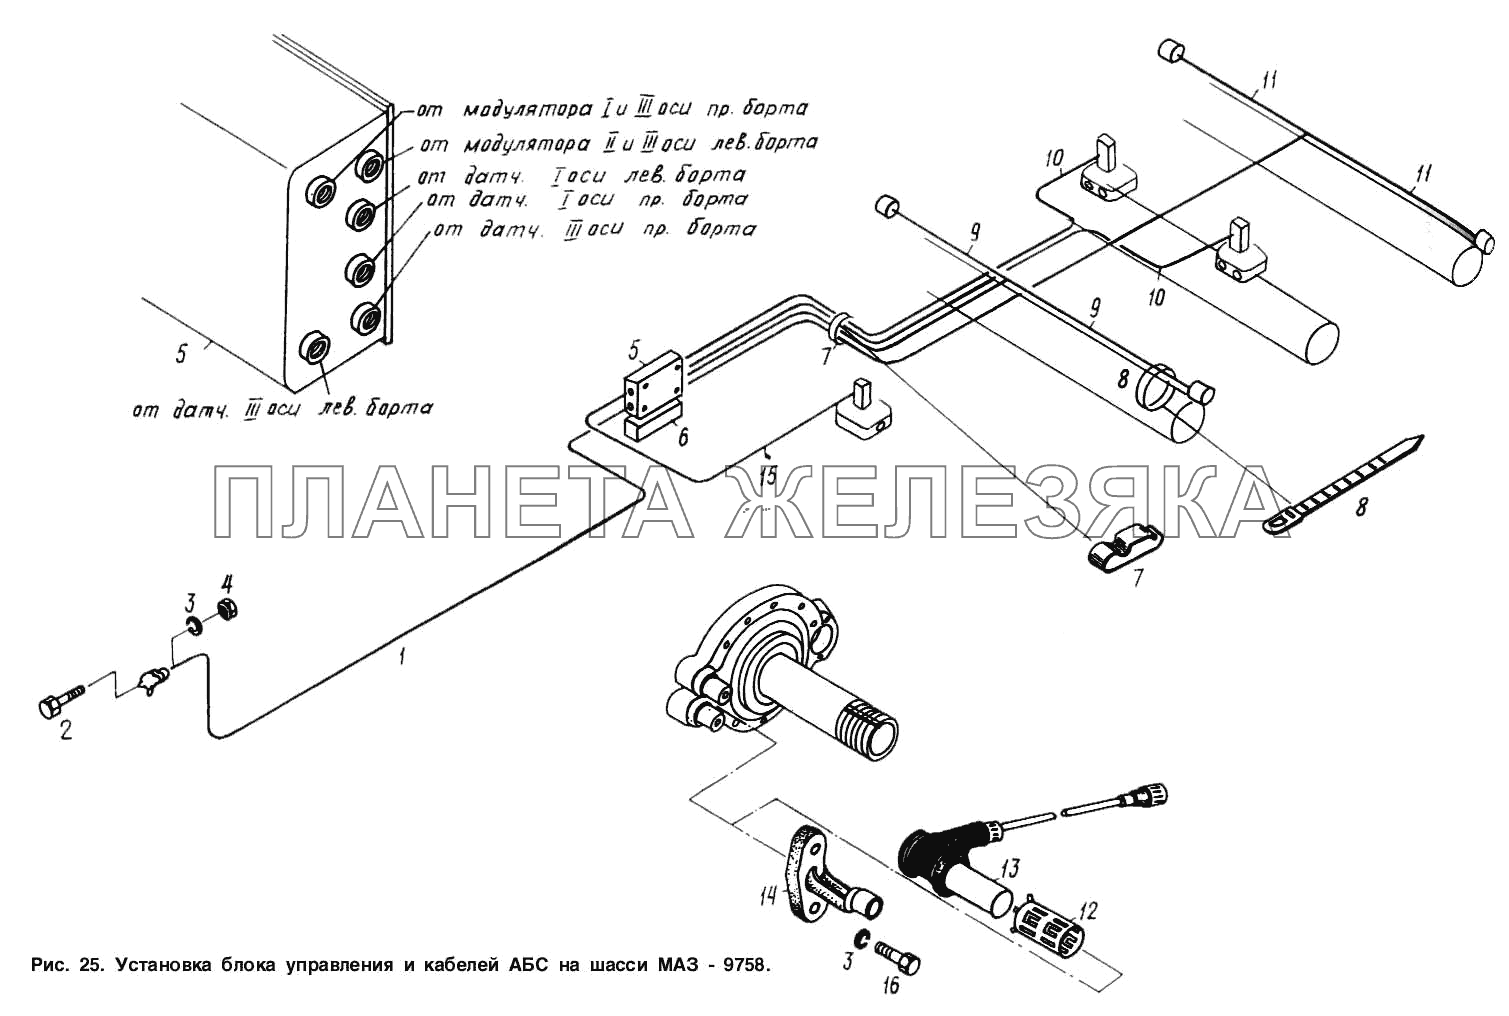 Установка блока управления и кабелей АБС на шасси МАЗ-9758 МАЗ-9758